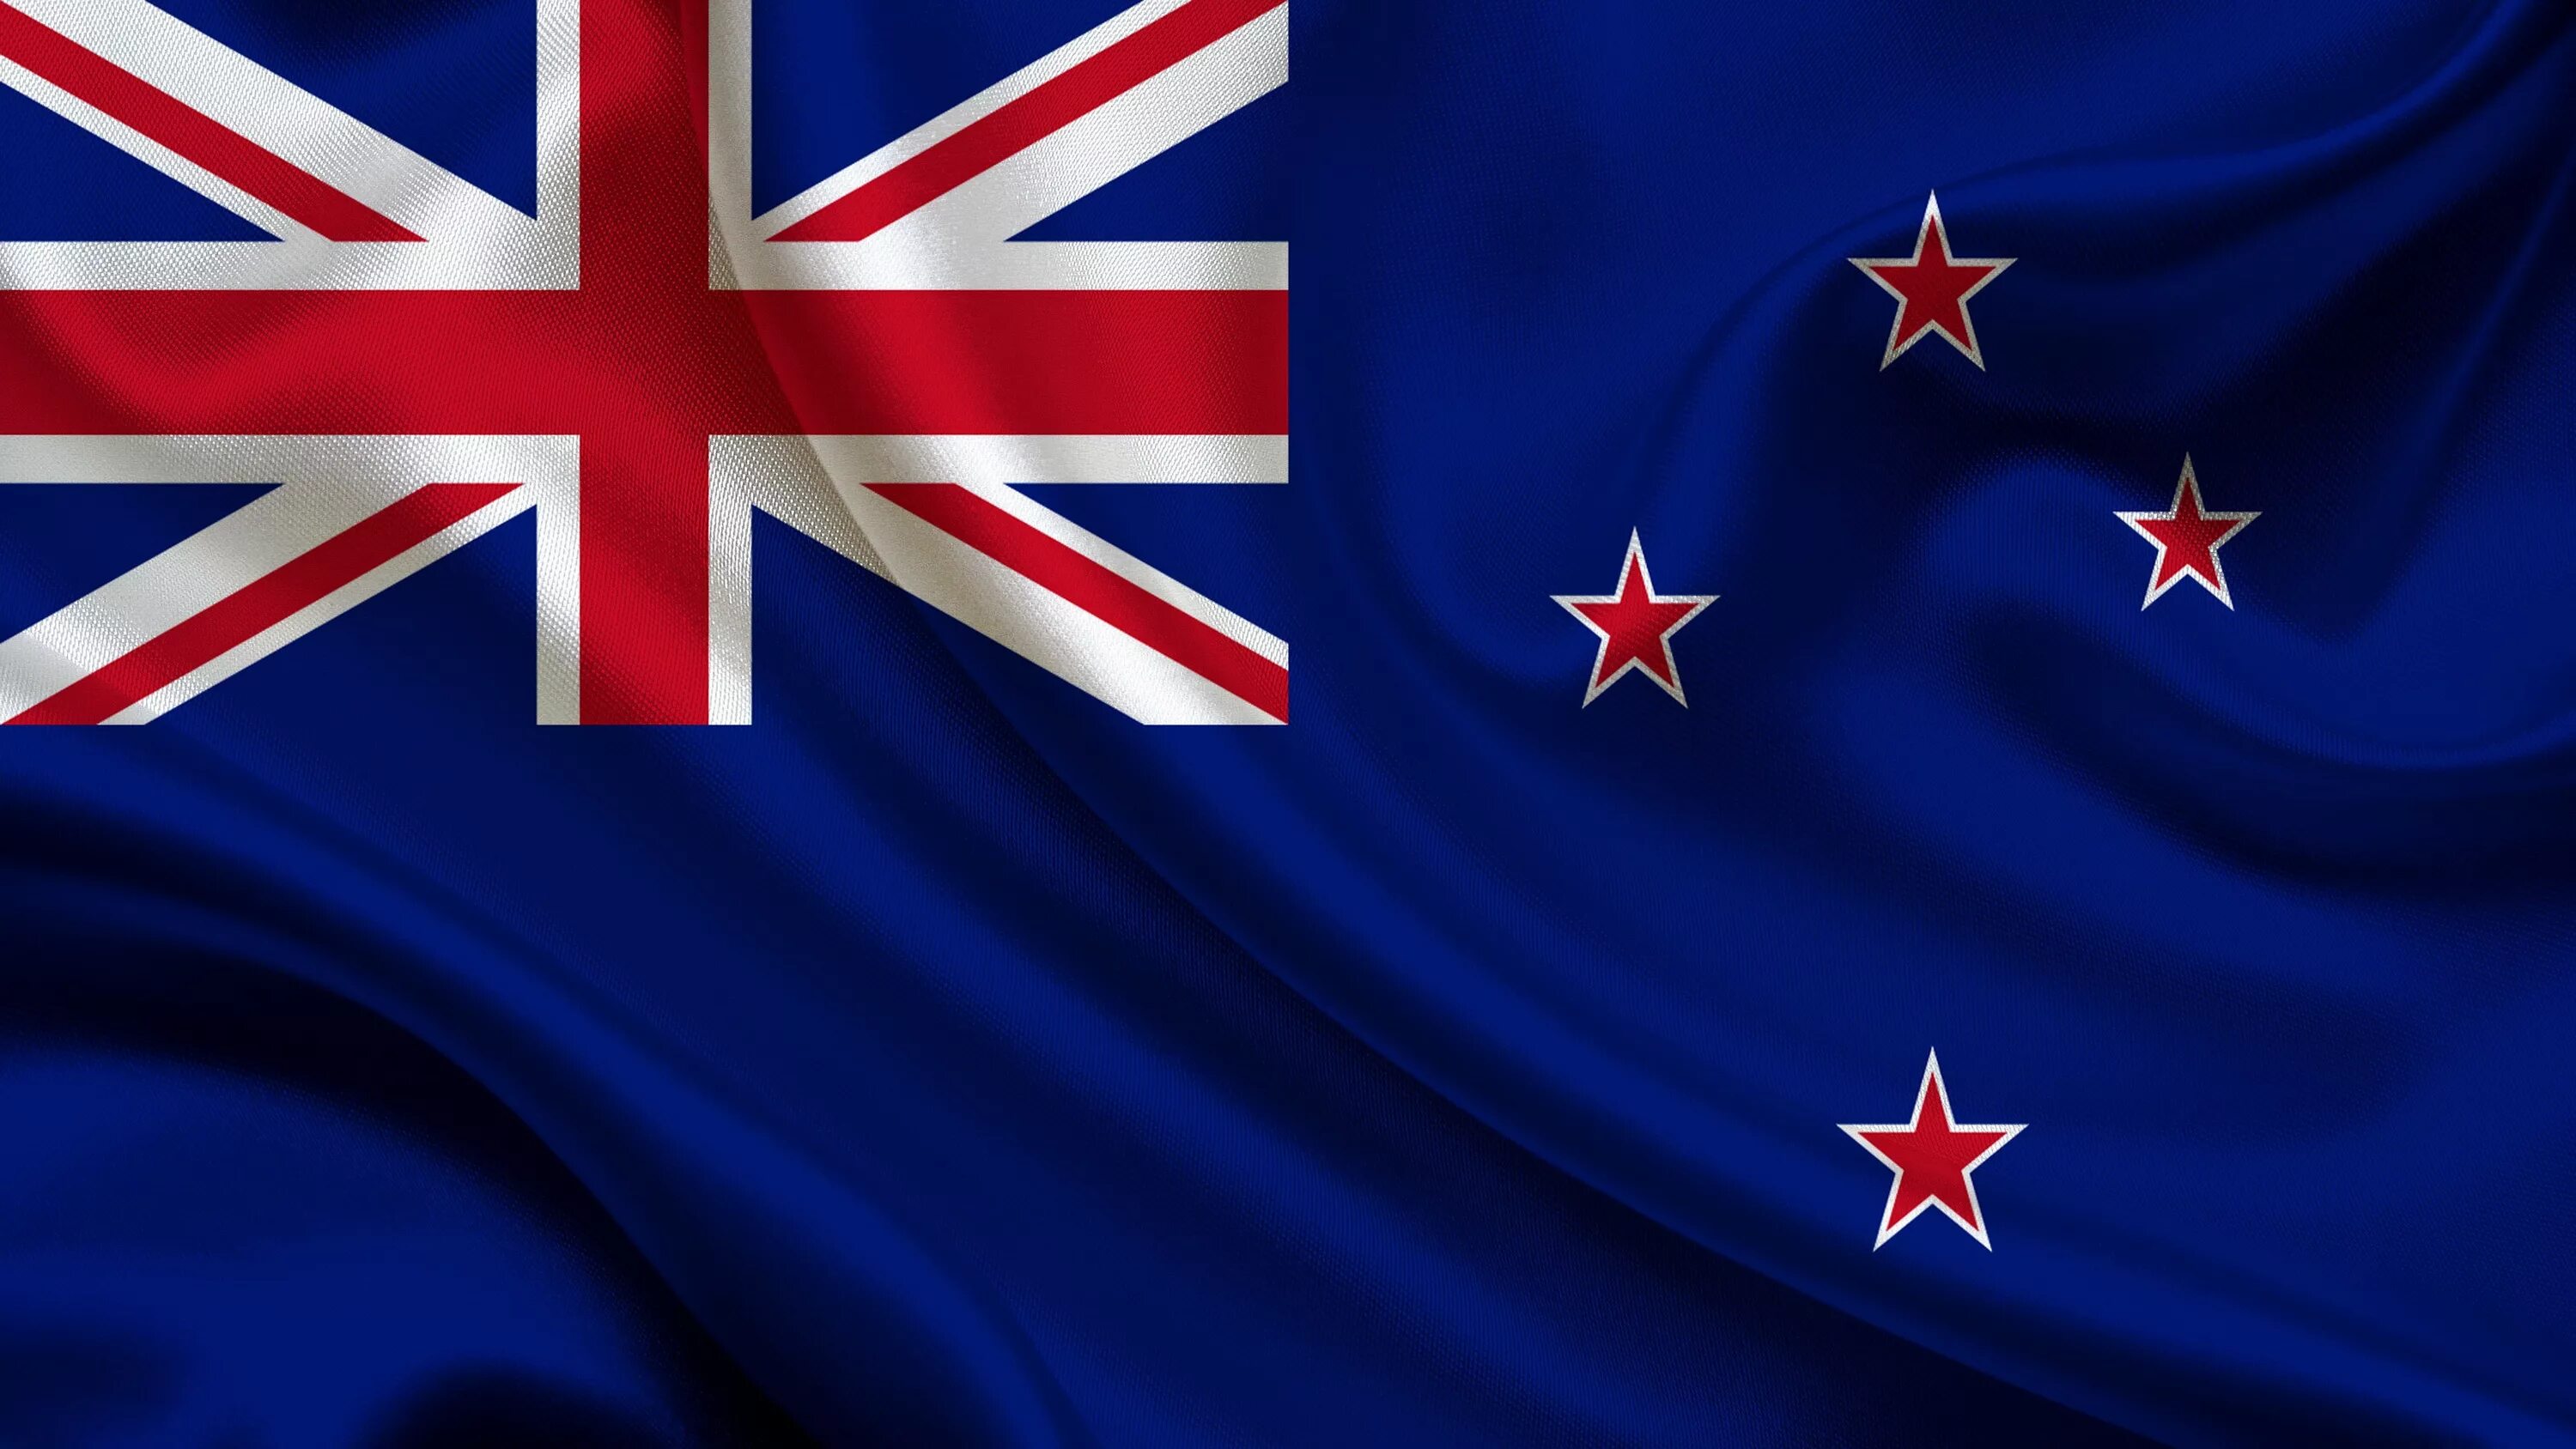 Зиландия. New Zealand флаг. Флаг новой Зеландии флаг новой Зеландии. Флаг Австралии и флаг новой Зеландии. Флаг новой Австралии и новой Зеландии.